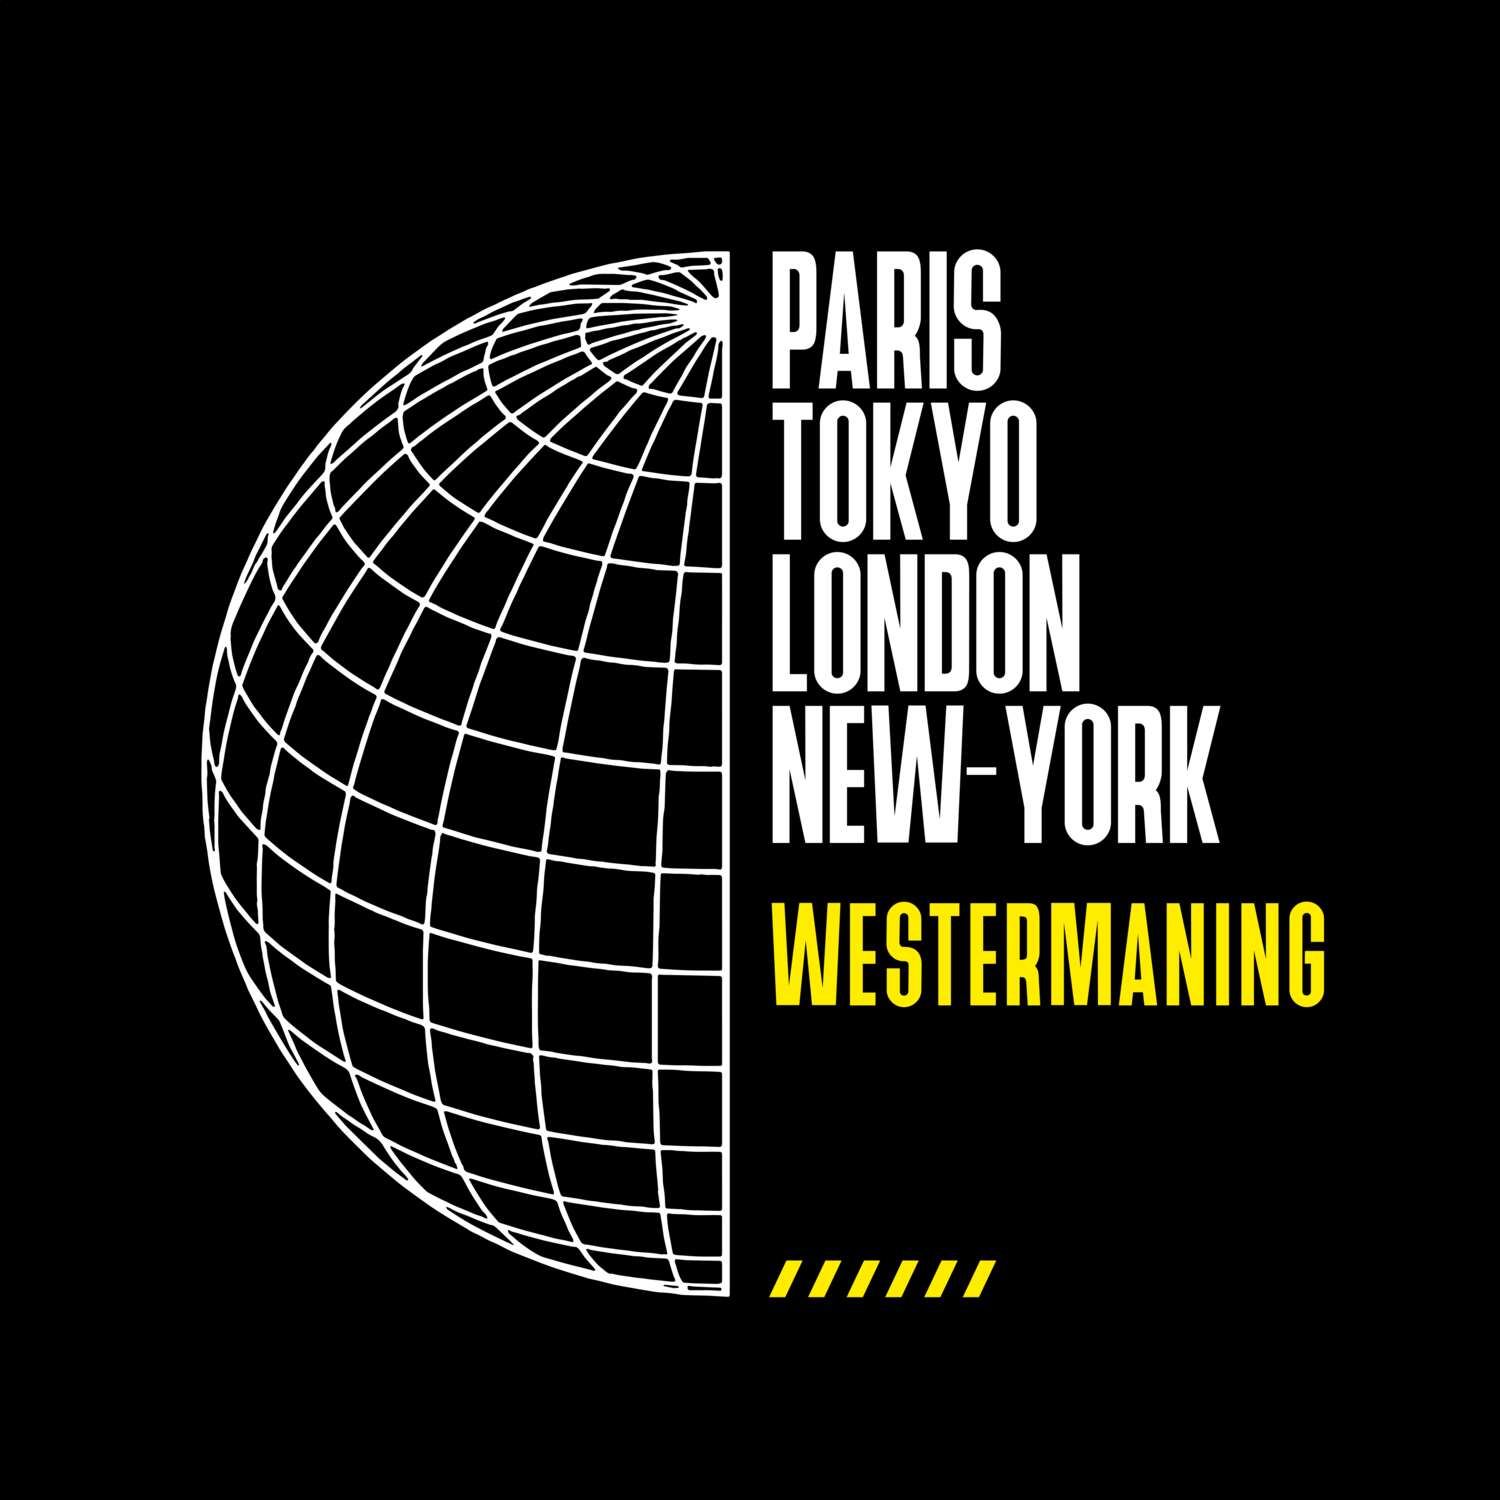 Westermaning T-Shirt »Paris Tokyo London«